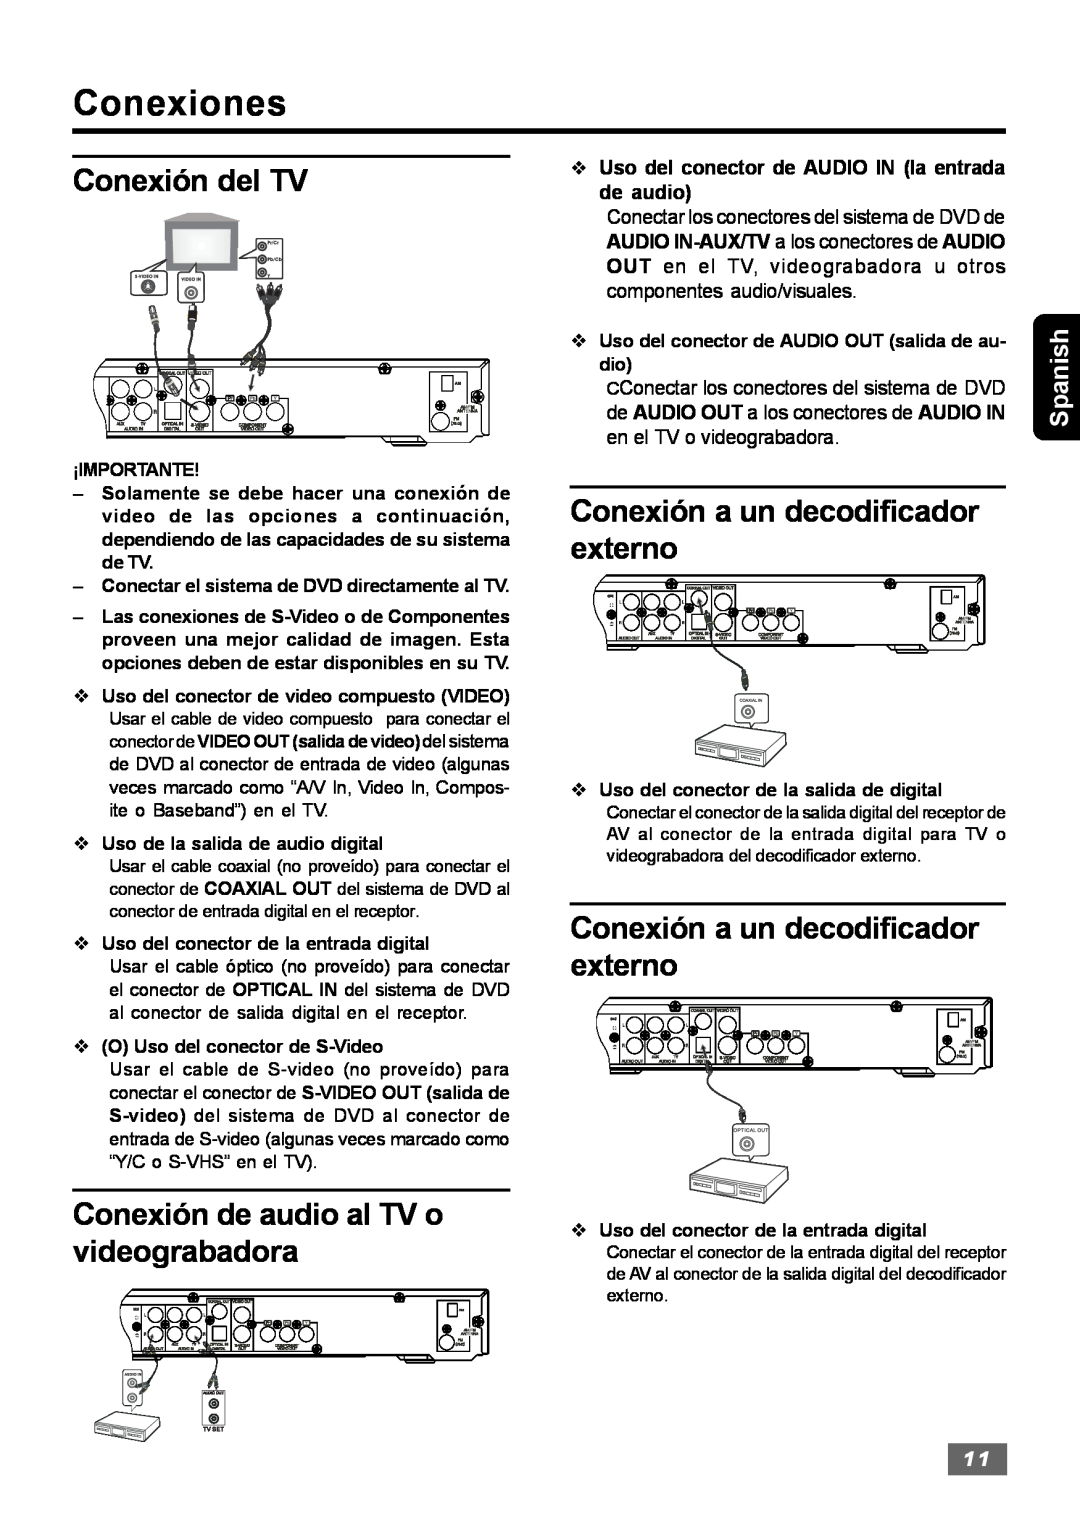 Insignia IS-HTIB102731 Conexión del TV, Conexión de audio al TV o videograbadora, Conexión a un decodificador externo 